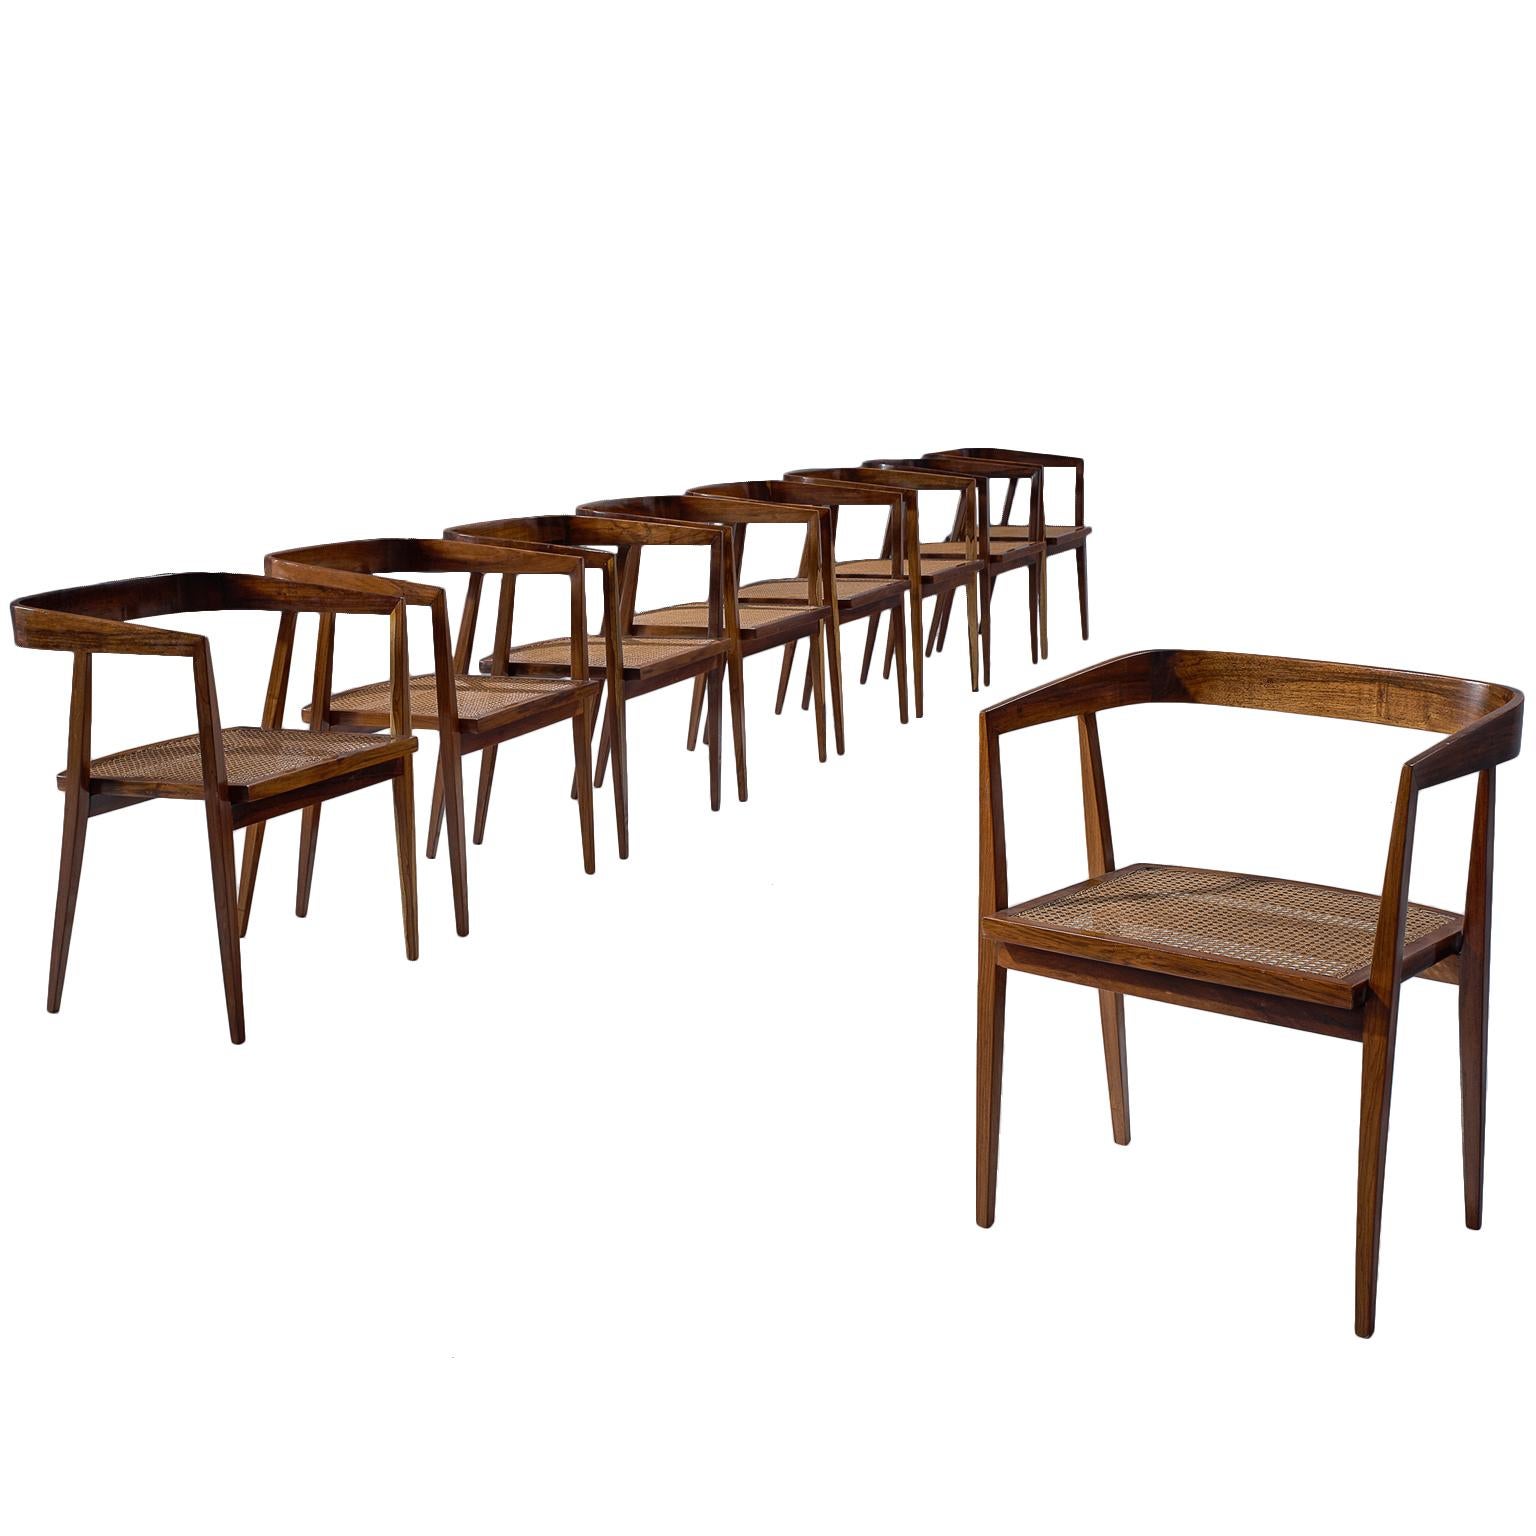 Joaquim Tenreiro Large Set Of Jacaranda And Cane Chairs For Sale At